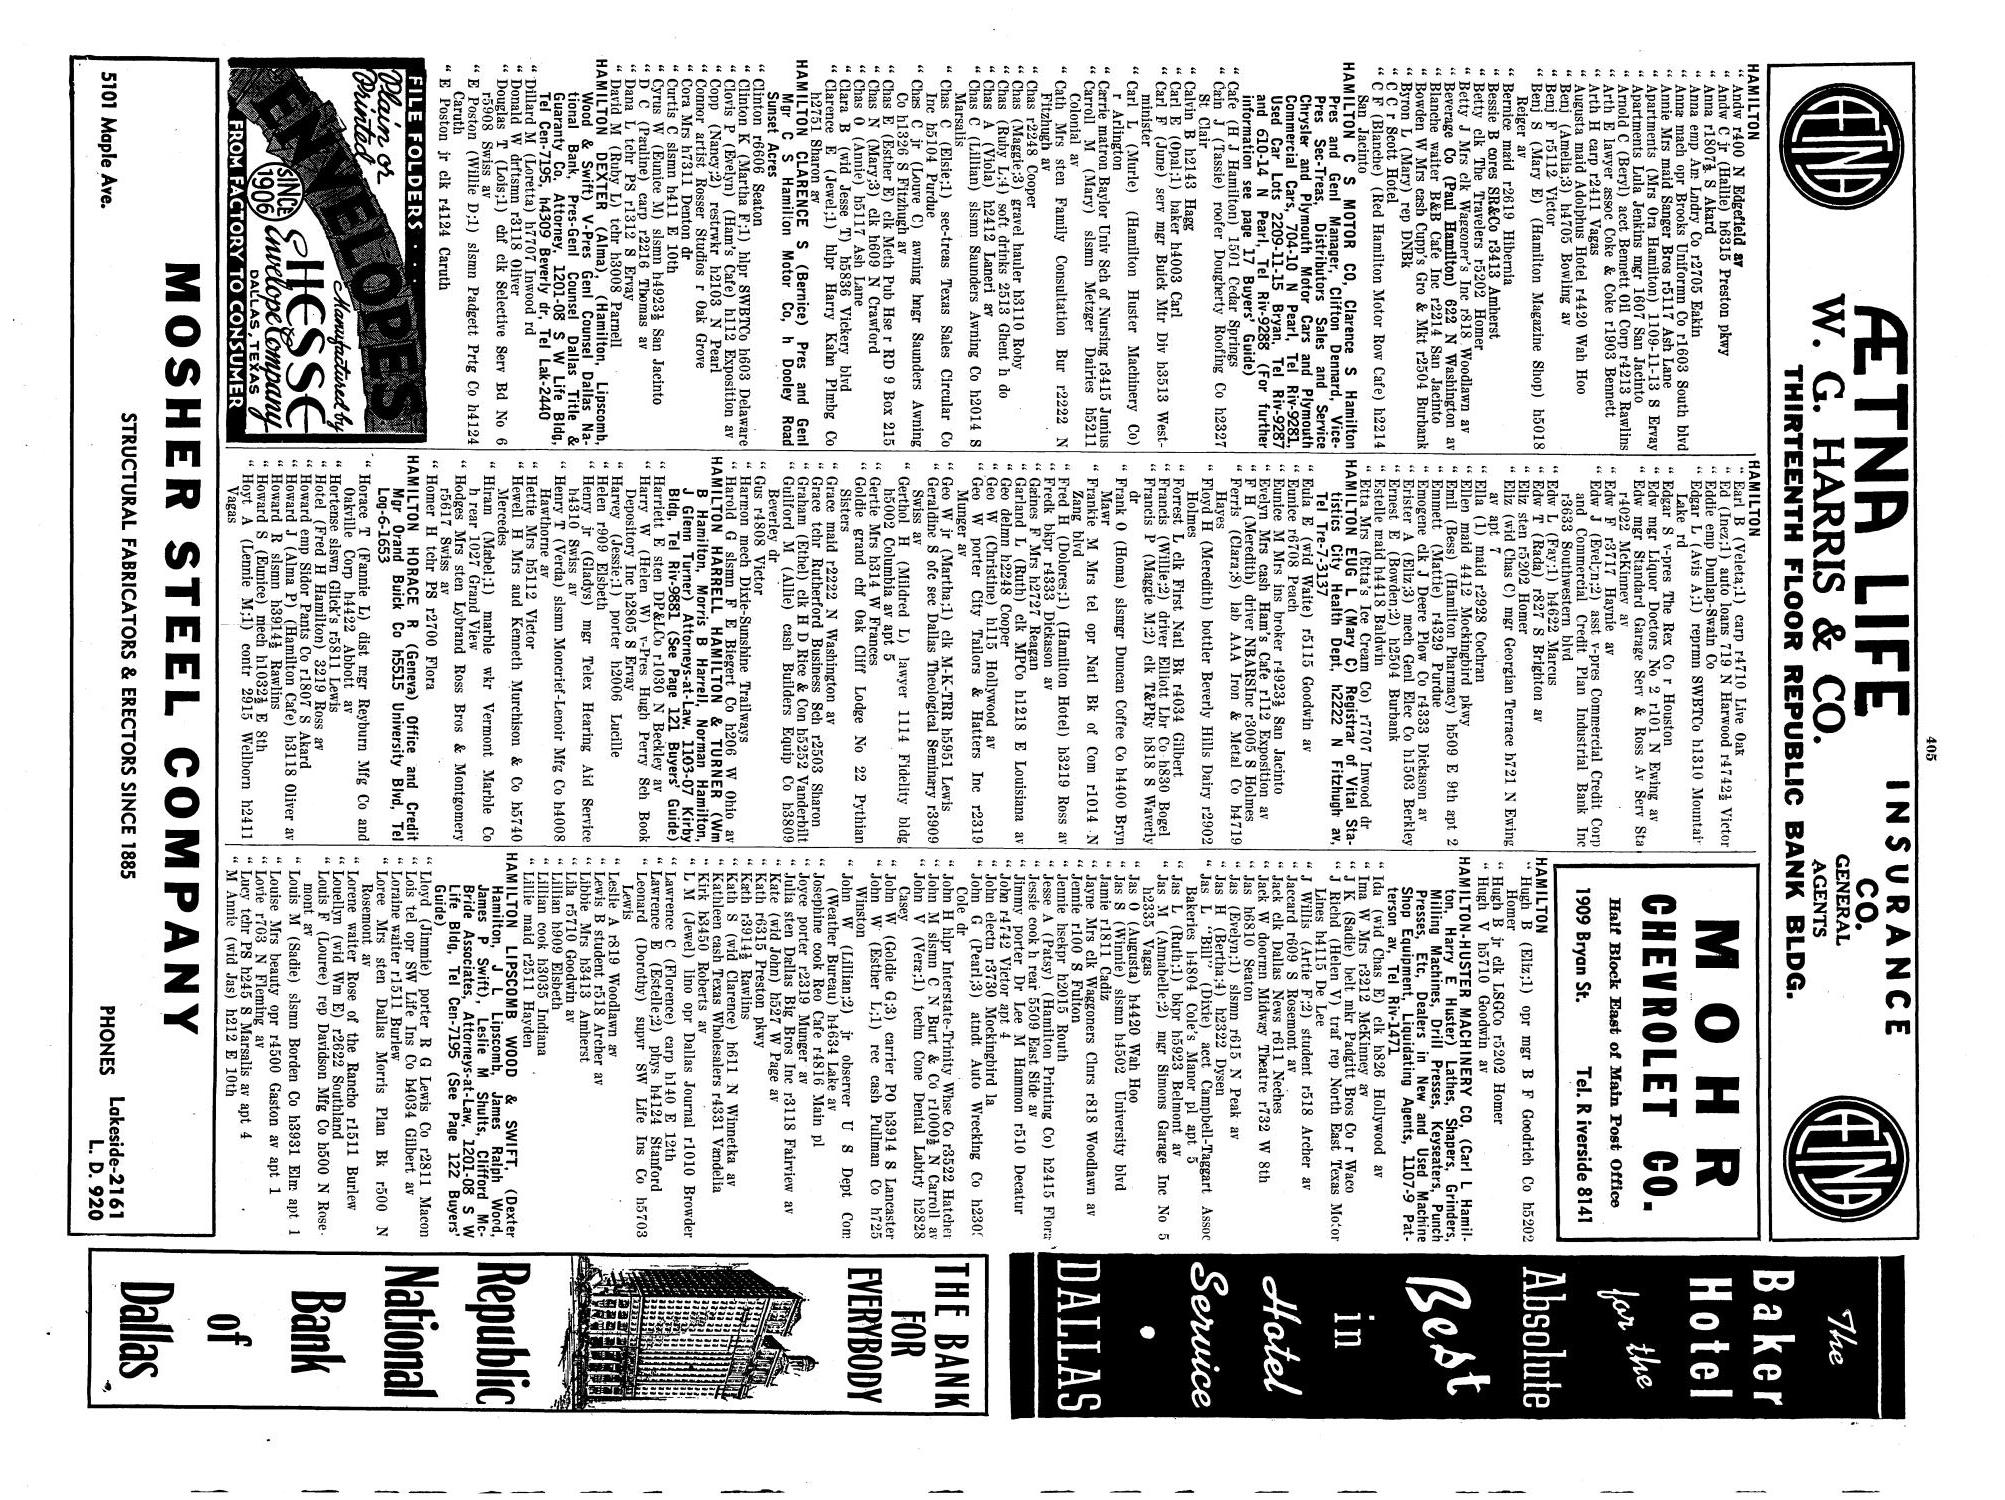 Dallas City Directory, 1941
                                                
                                                    405
                                                